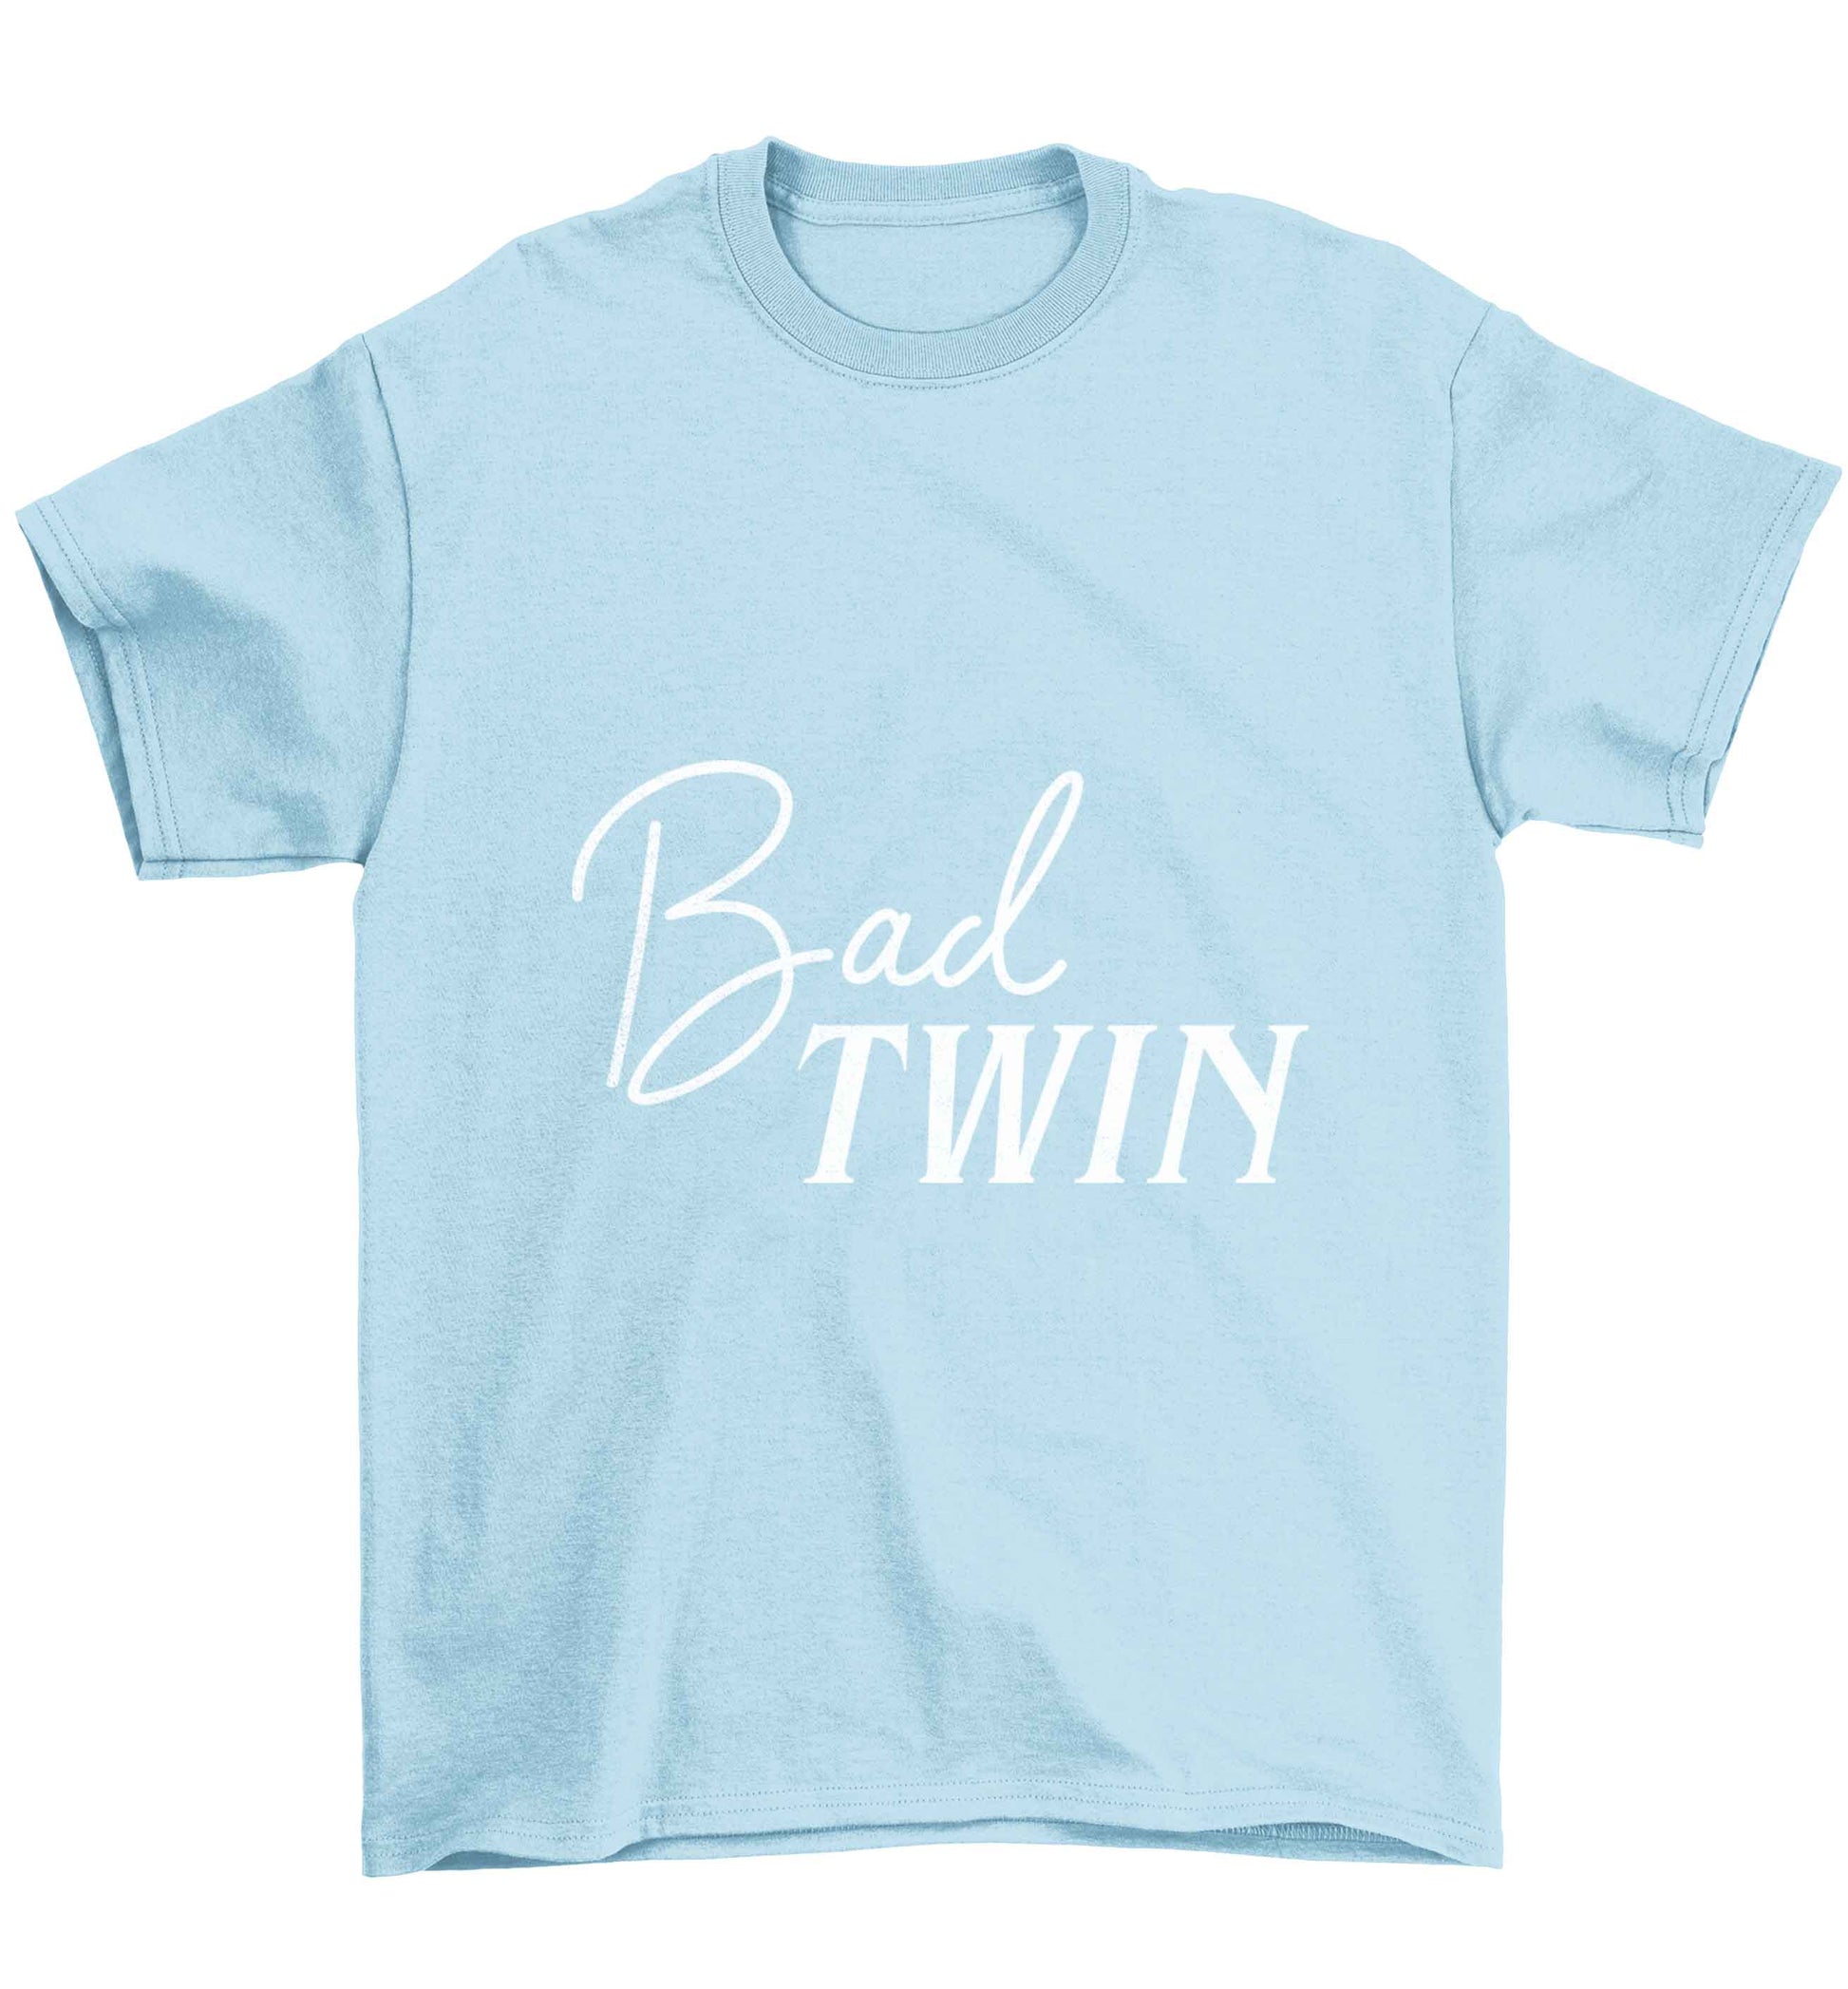 Bad twin Children's light blue Tshirt 12-13 Years